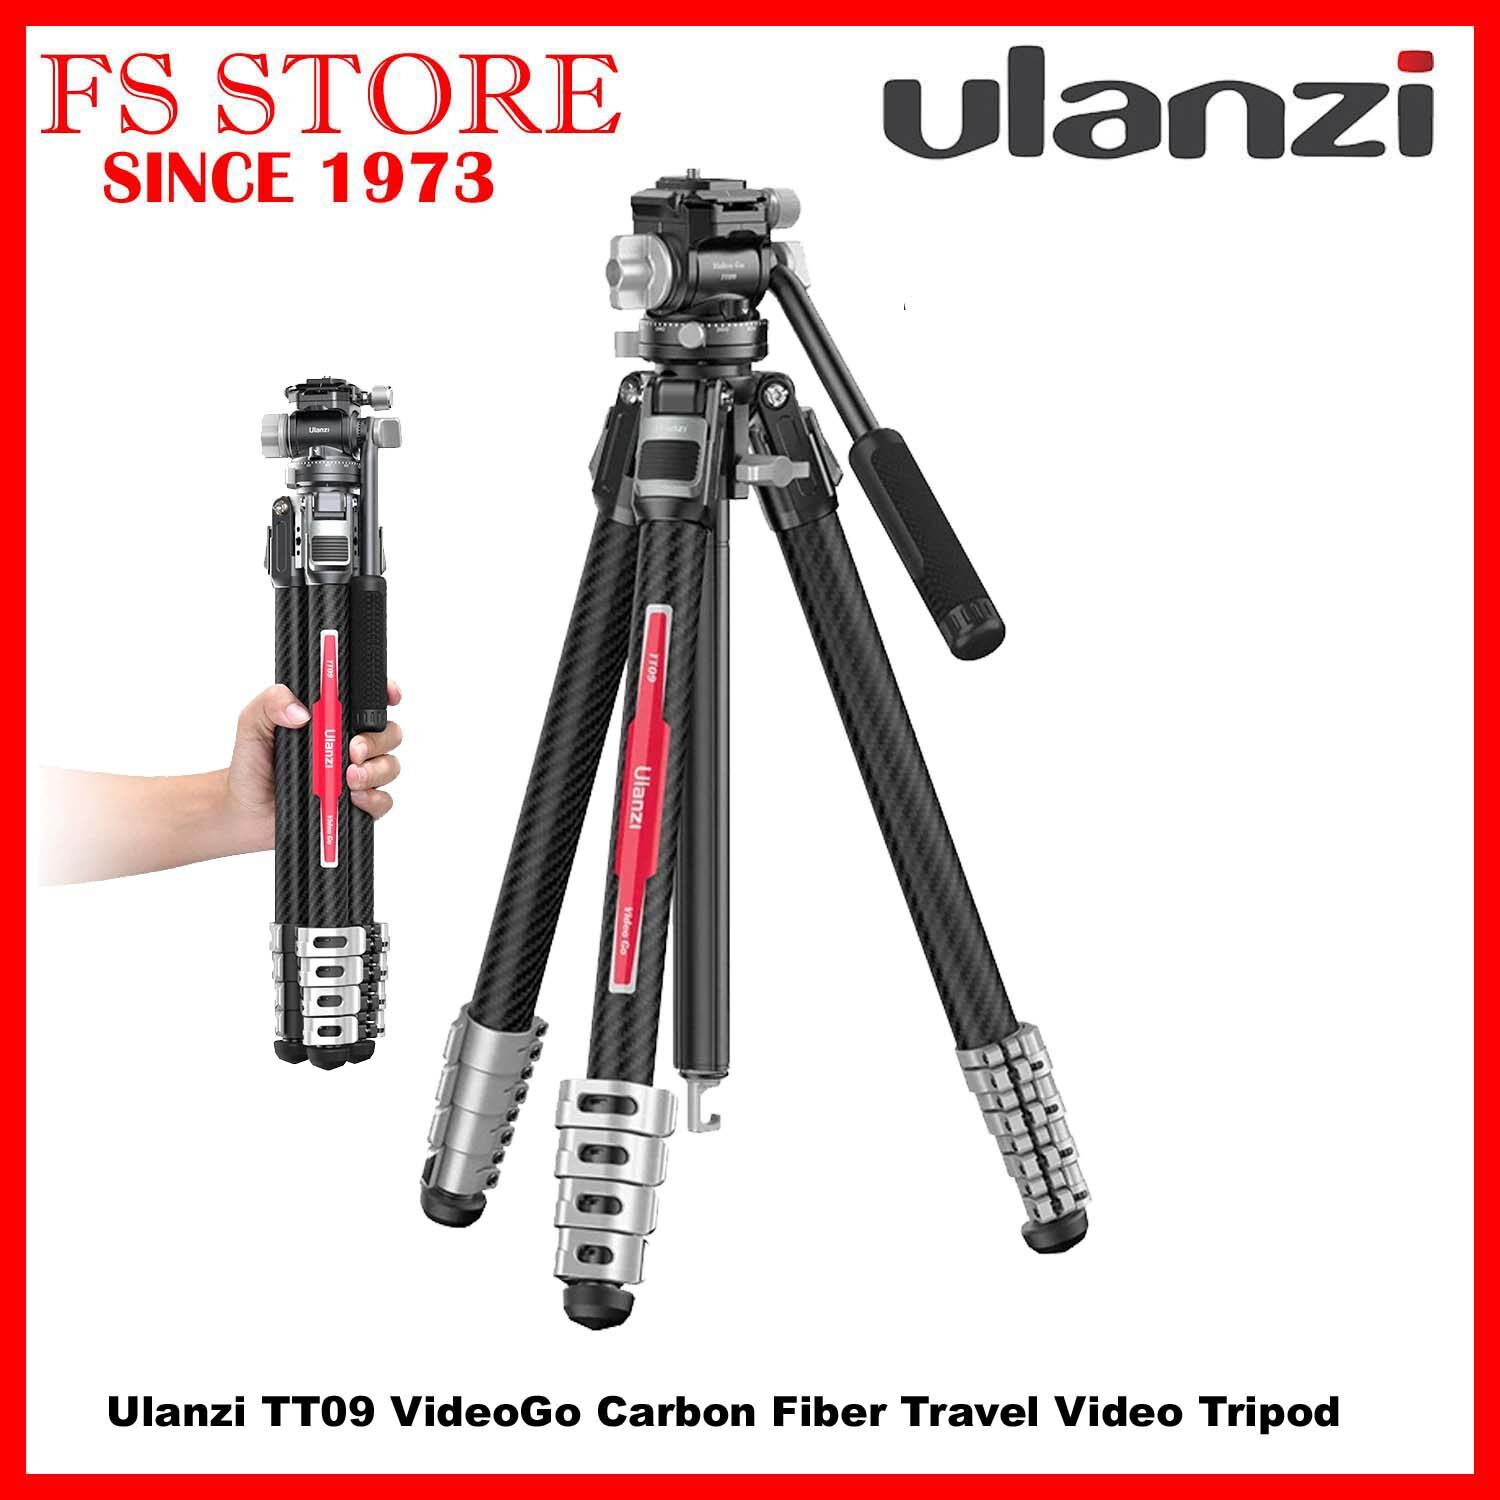 Ulanzi TT09 VideoGo Carbon Fiber Travel Video Tripod